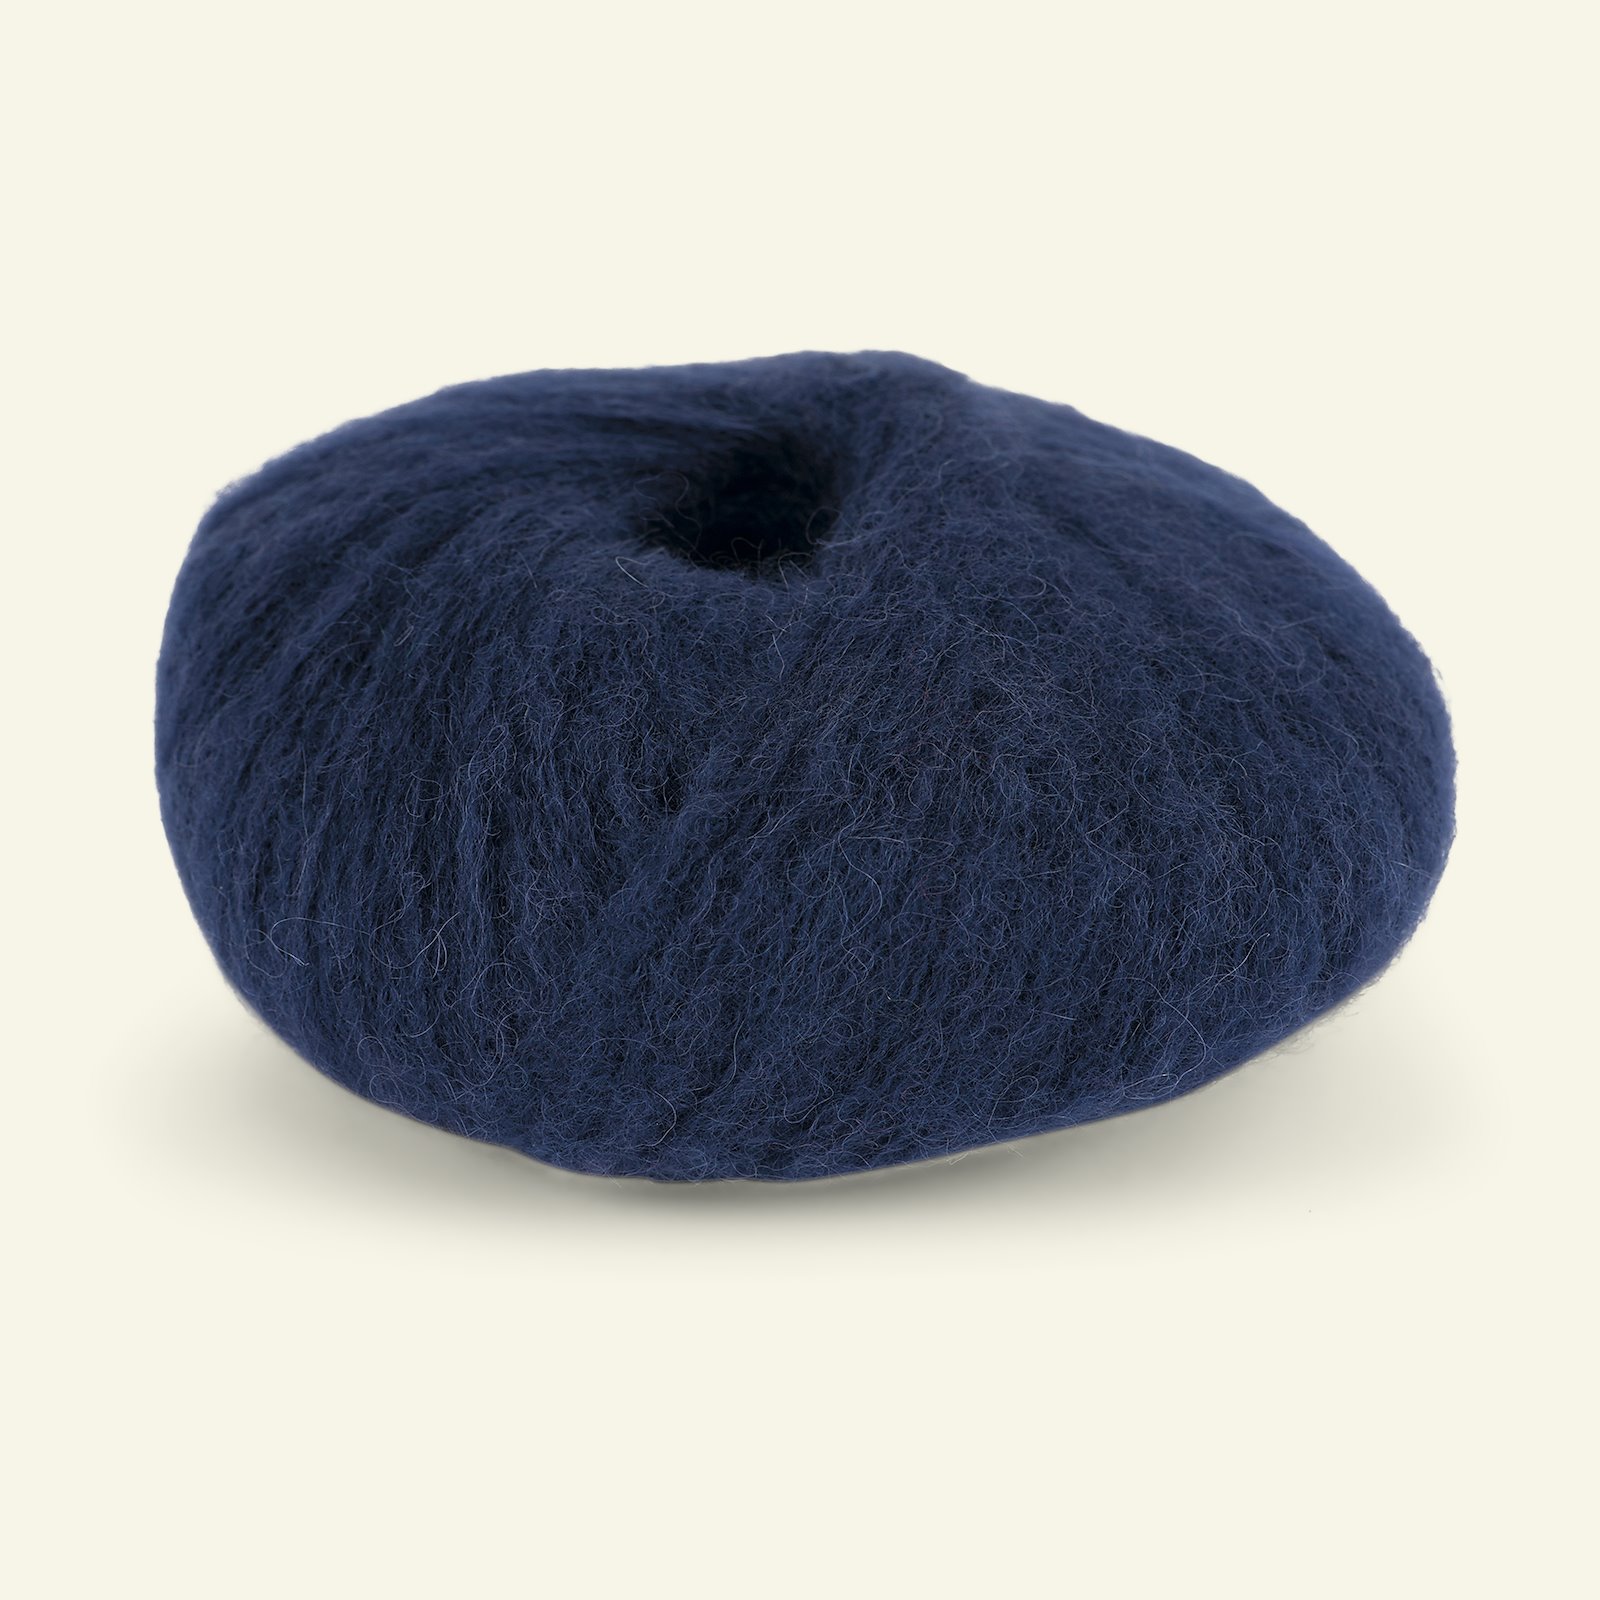 Du Store Alpakka, airy alpaca yarn "Faerytale", navy blue (788) 90000601_pack_b